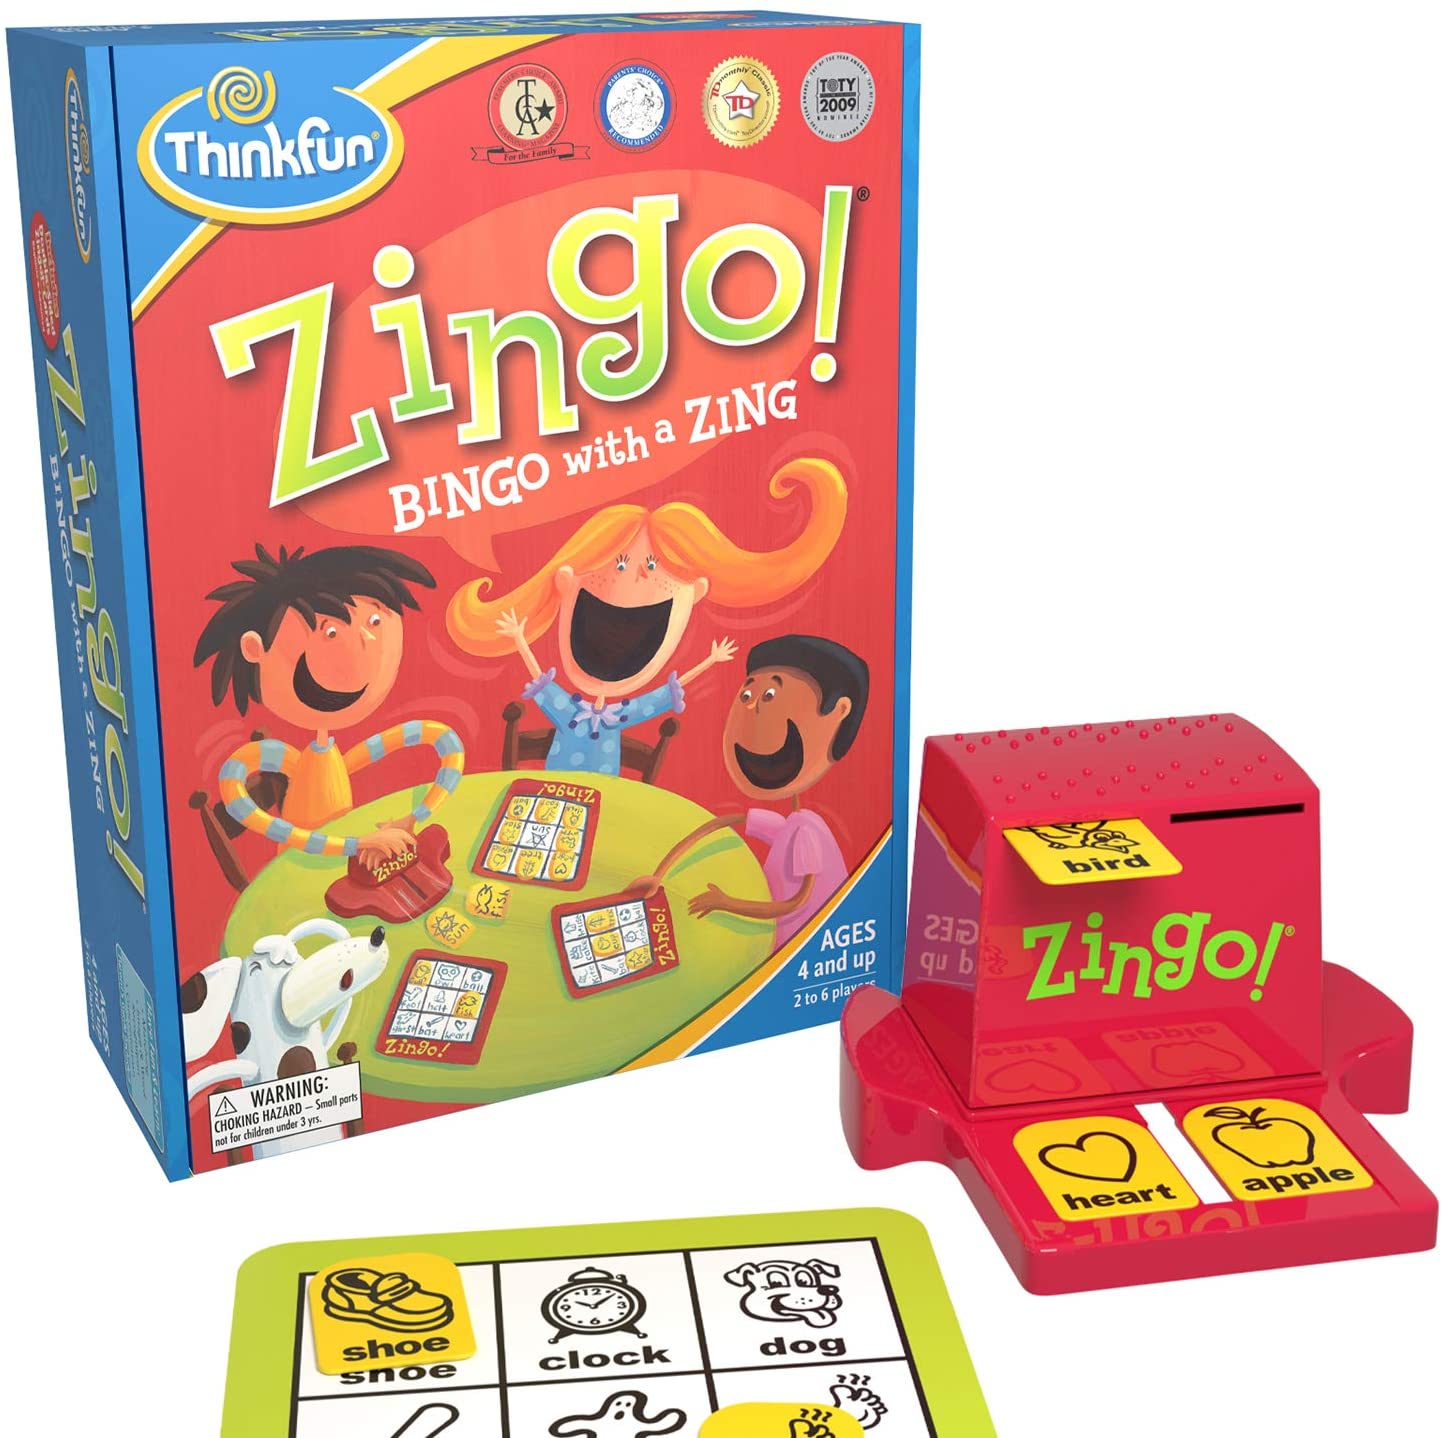 ThinkFun Zingo Bingo Award Winning Preschool Game for Pre Readers and Early Readers Age 4 and Up